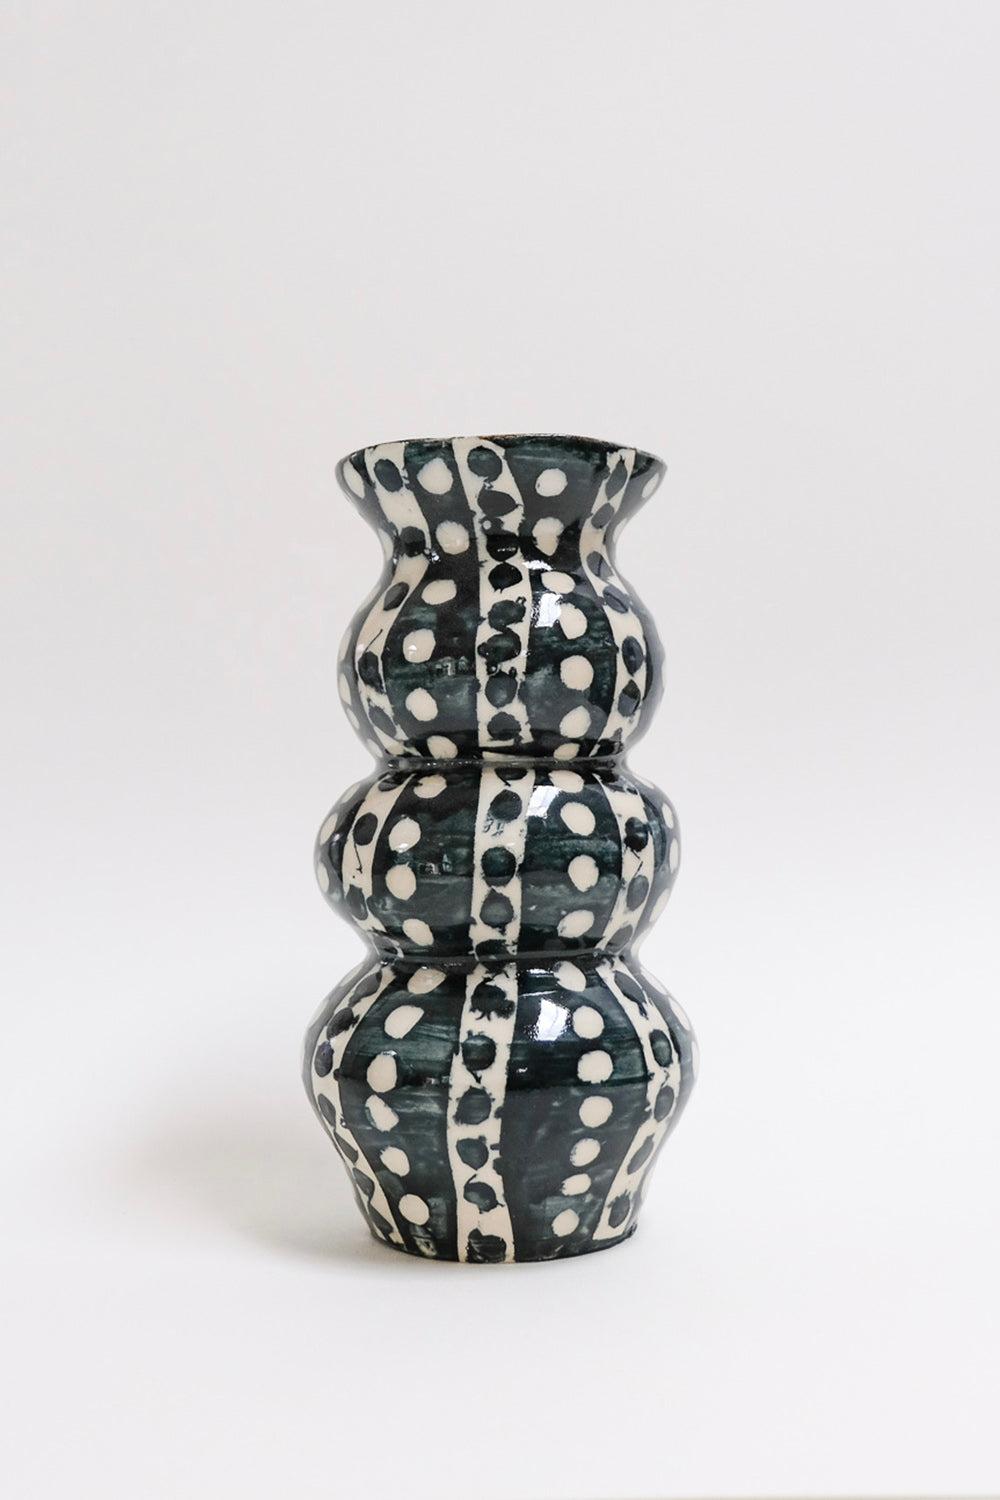 Mur Vessel 8 - contemporary ceramic polka dot art vase, wheel thrown hand built - Sculpture by Misbah Ahmed